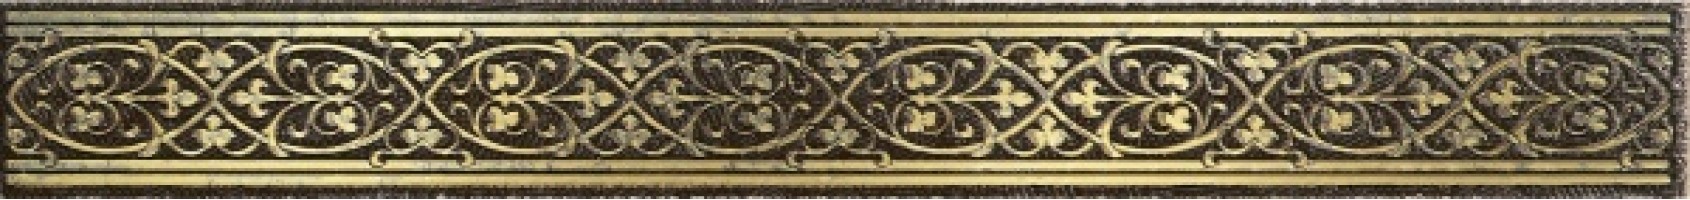 Бордюр Lasselsberger Ceramics Катар коричневый new gold 2.8х25 1502-0578